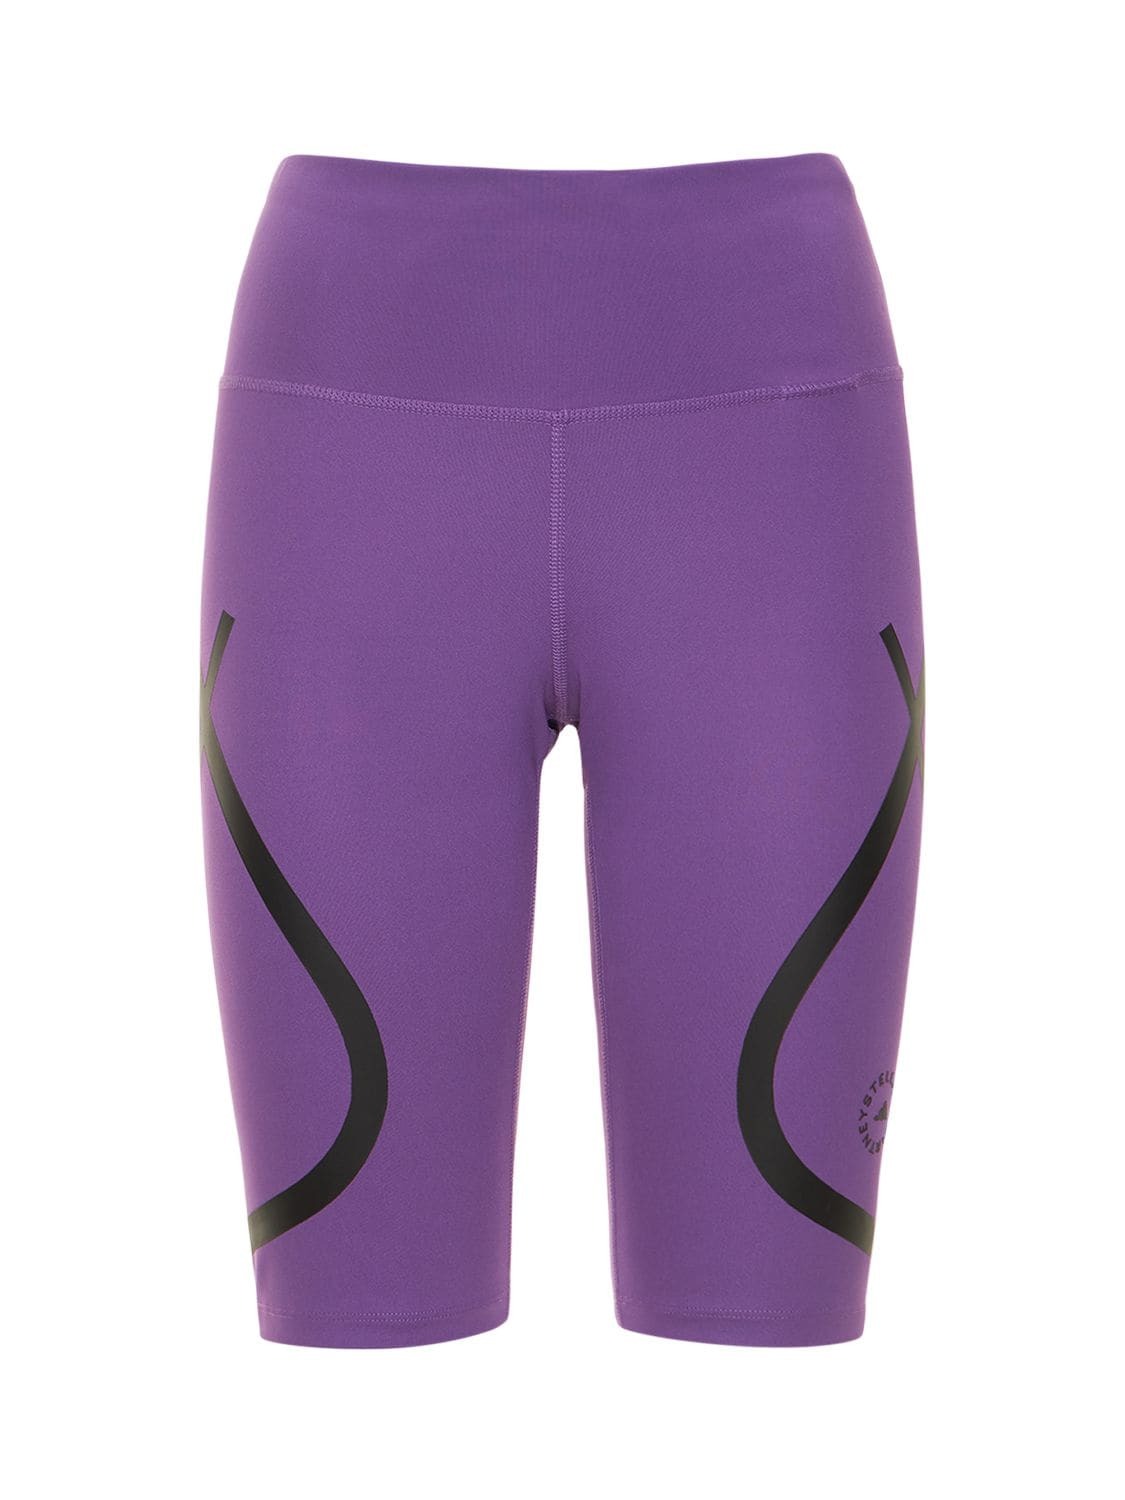 ADIDAS BY STELLA MCCARTNEY Running Biker Shorts in purple